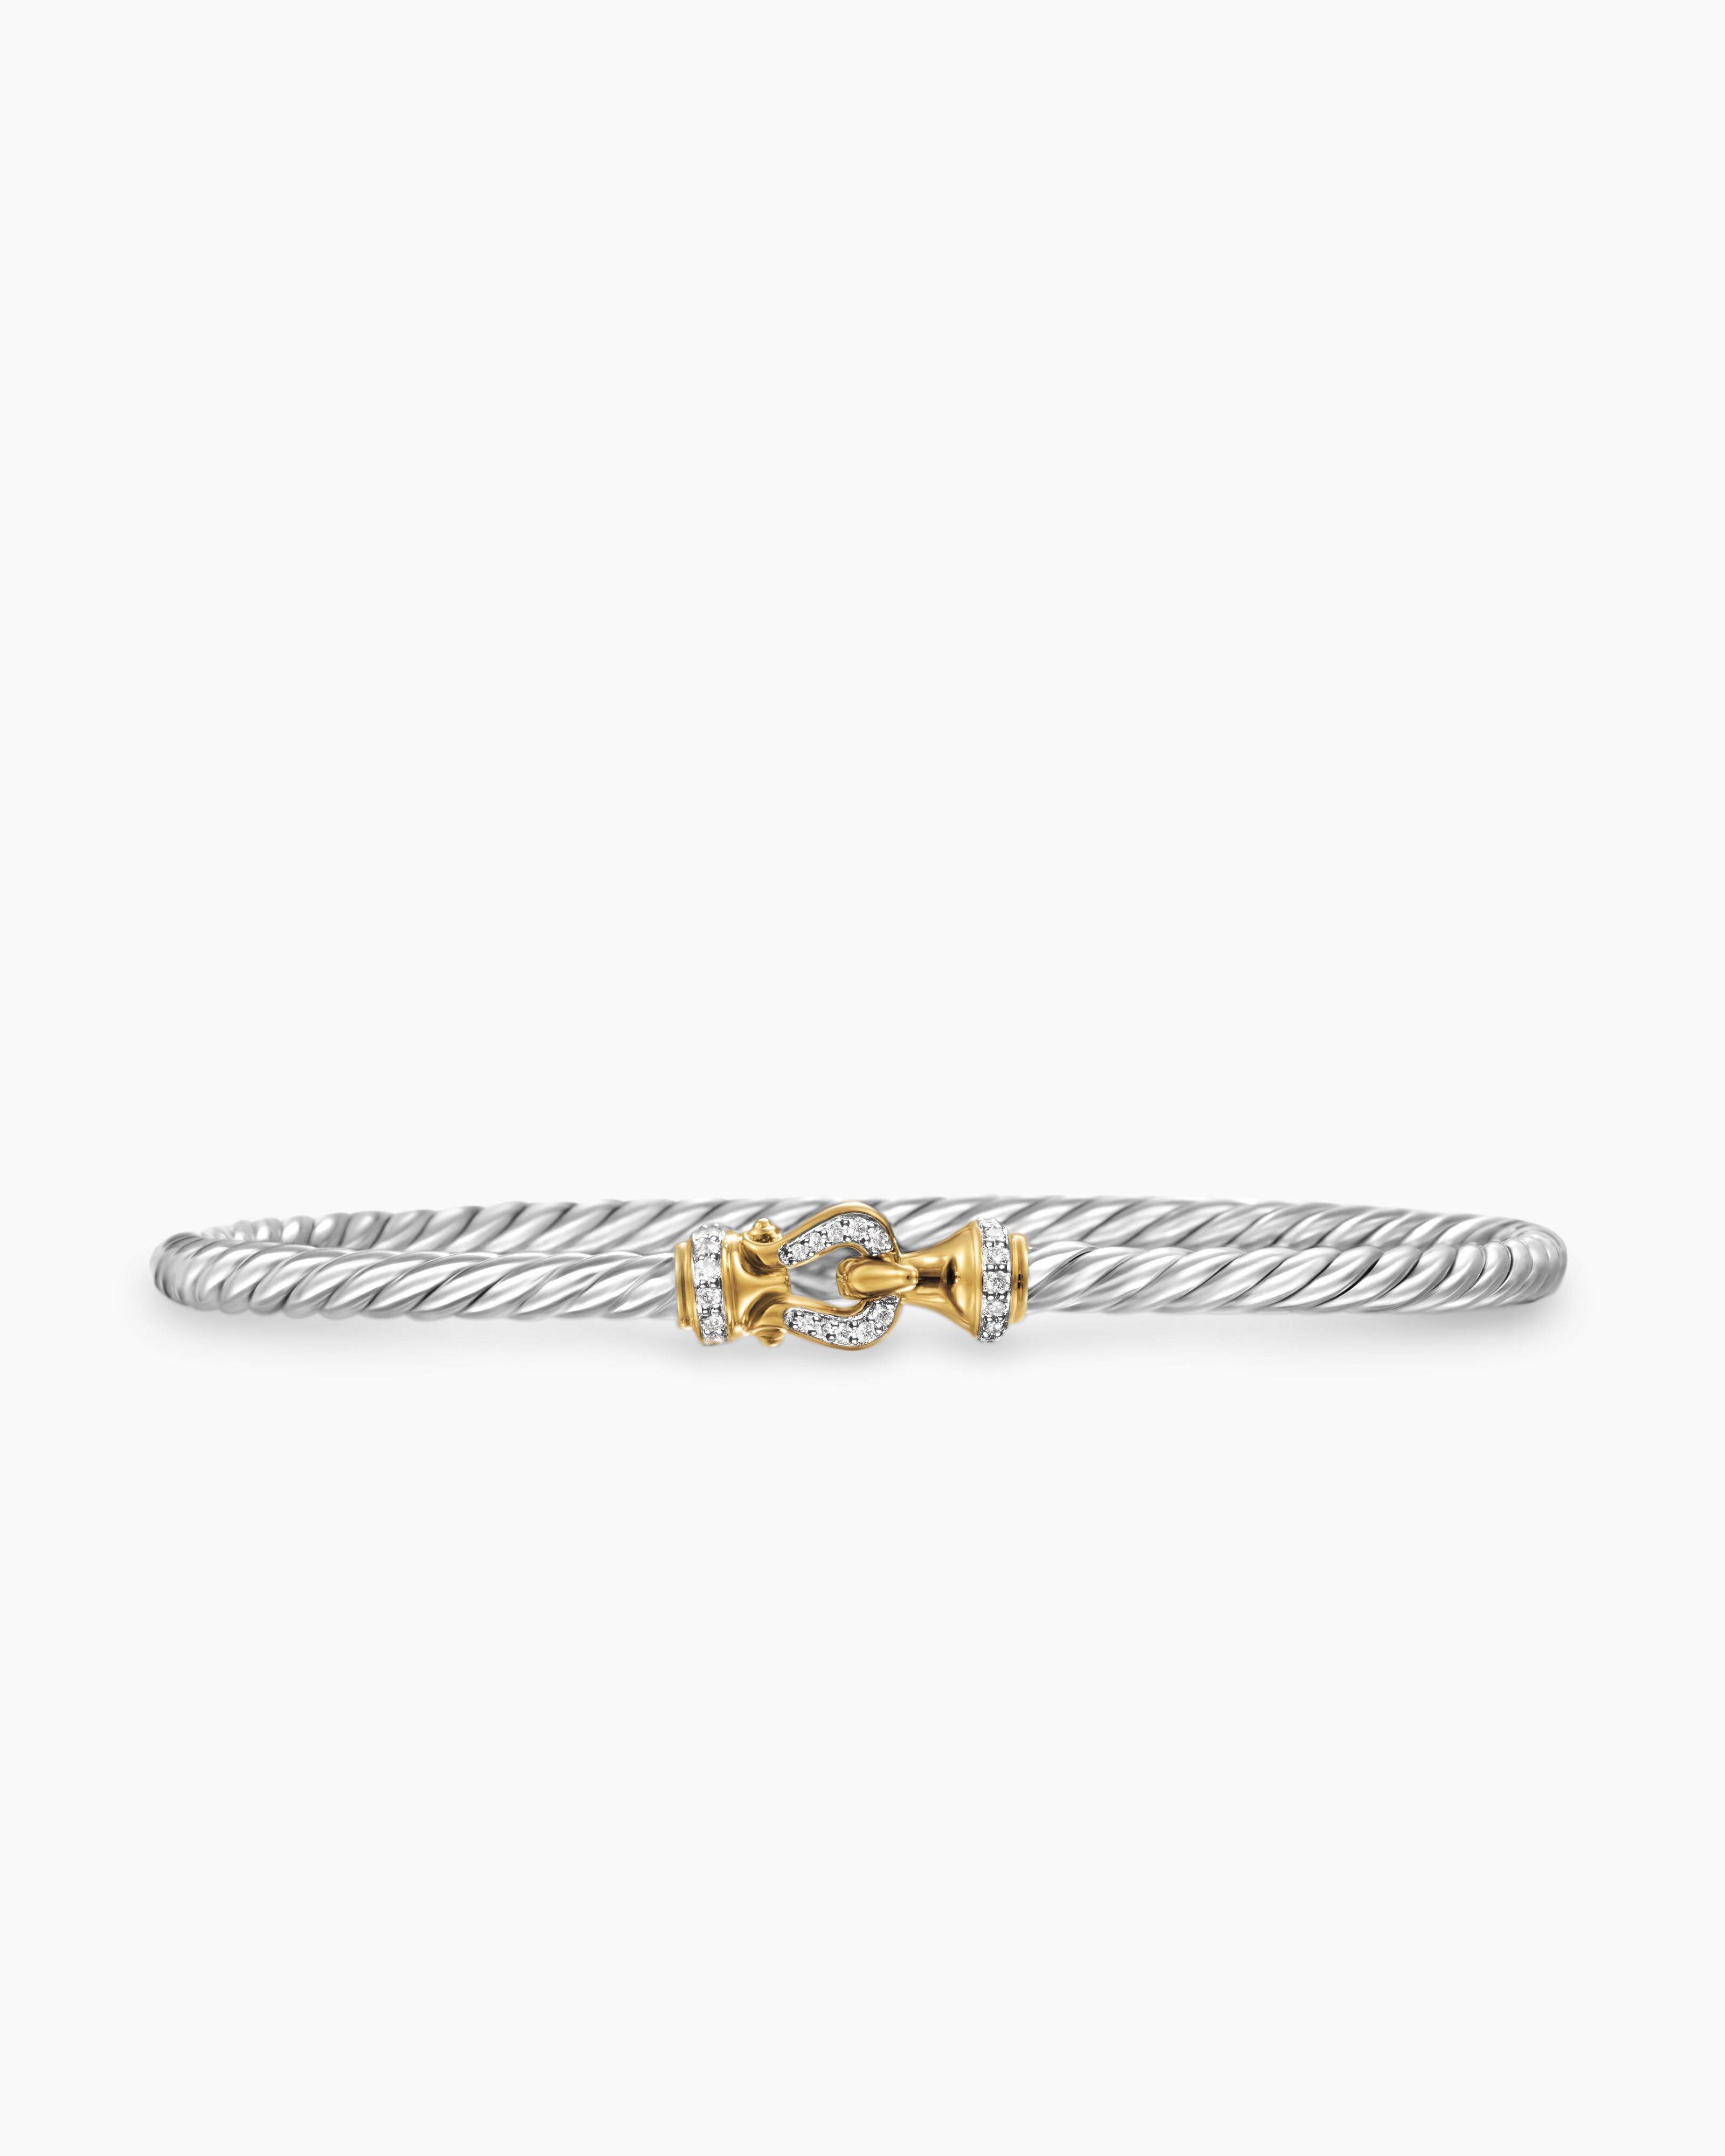 David Yurman Petite Pavé Labyrinth Single-Loop Diamond Bracelet 18K Yellow  Gold - $3,350.00 at El Palacio Jewelry Shop